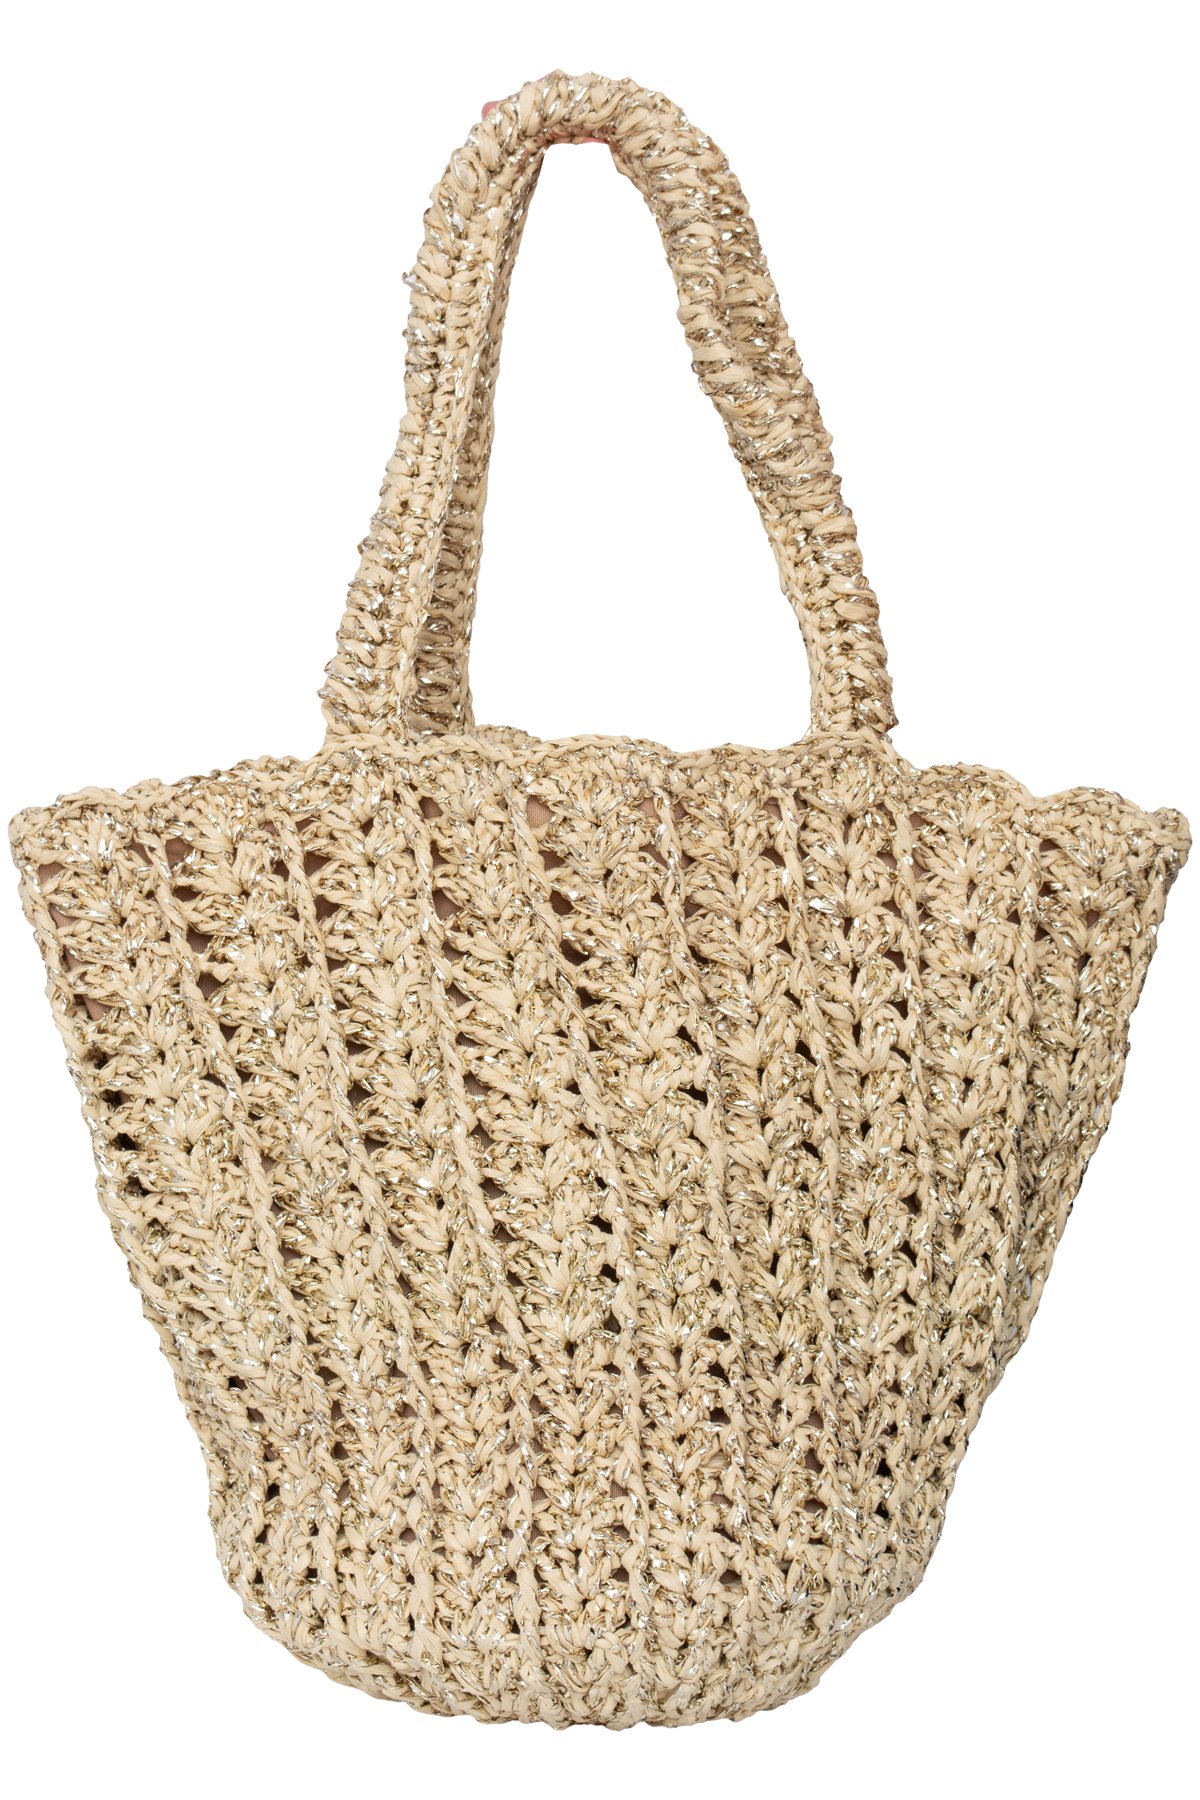 Hand Knitted Straw Beach Bag